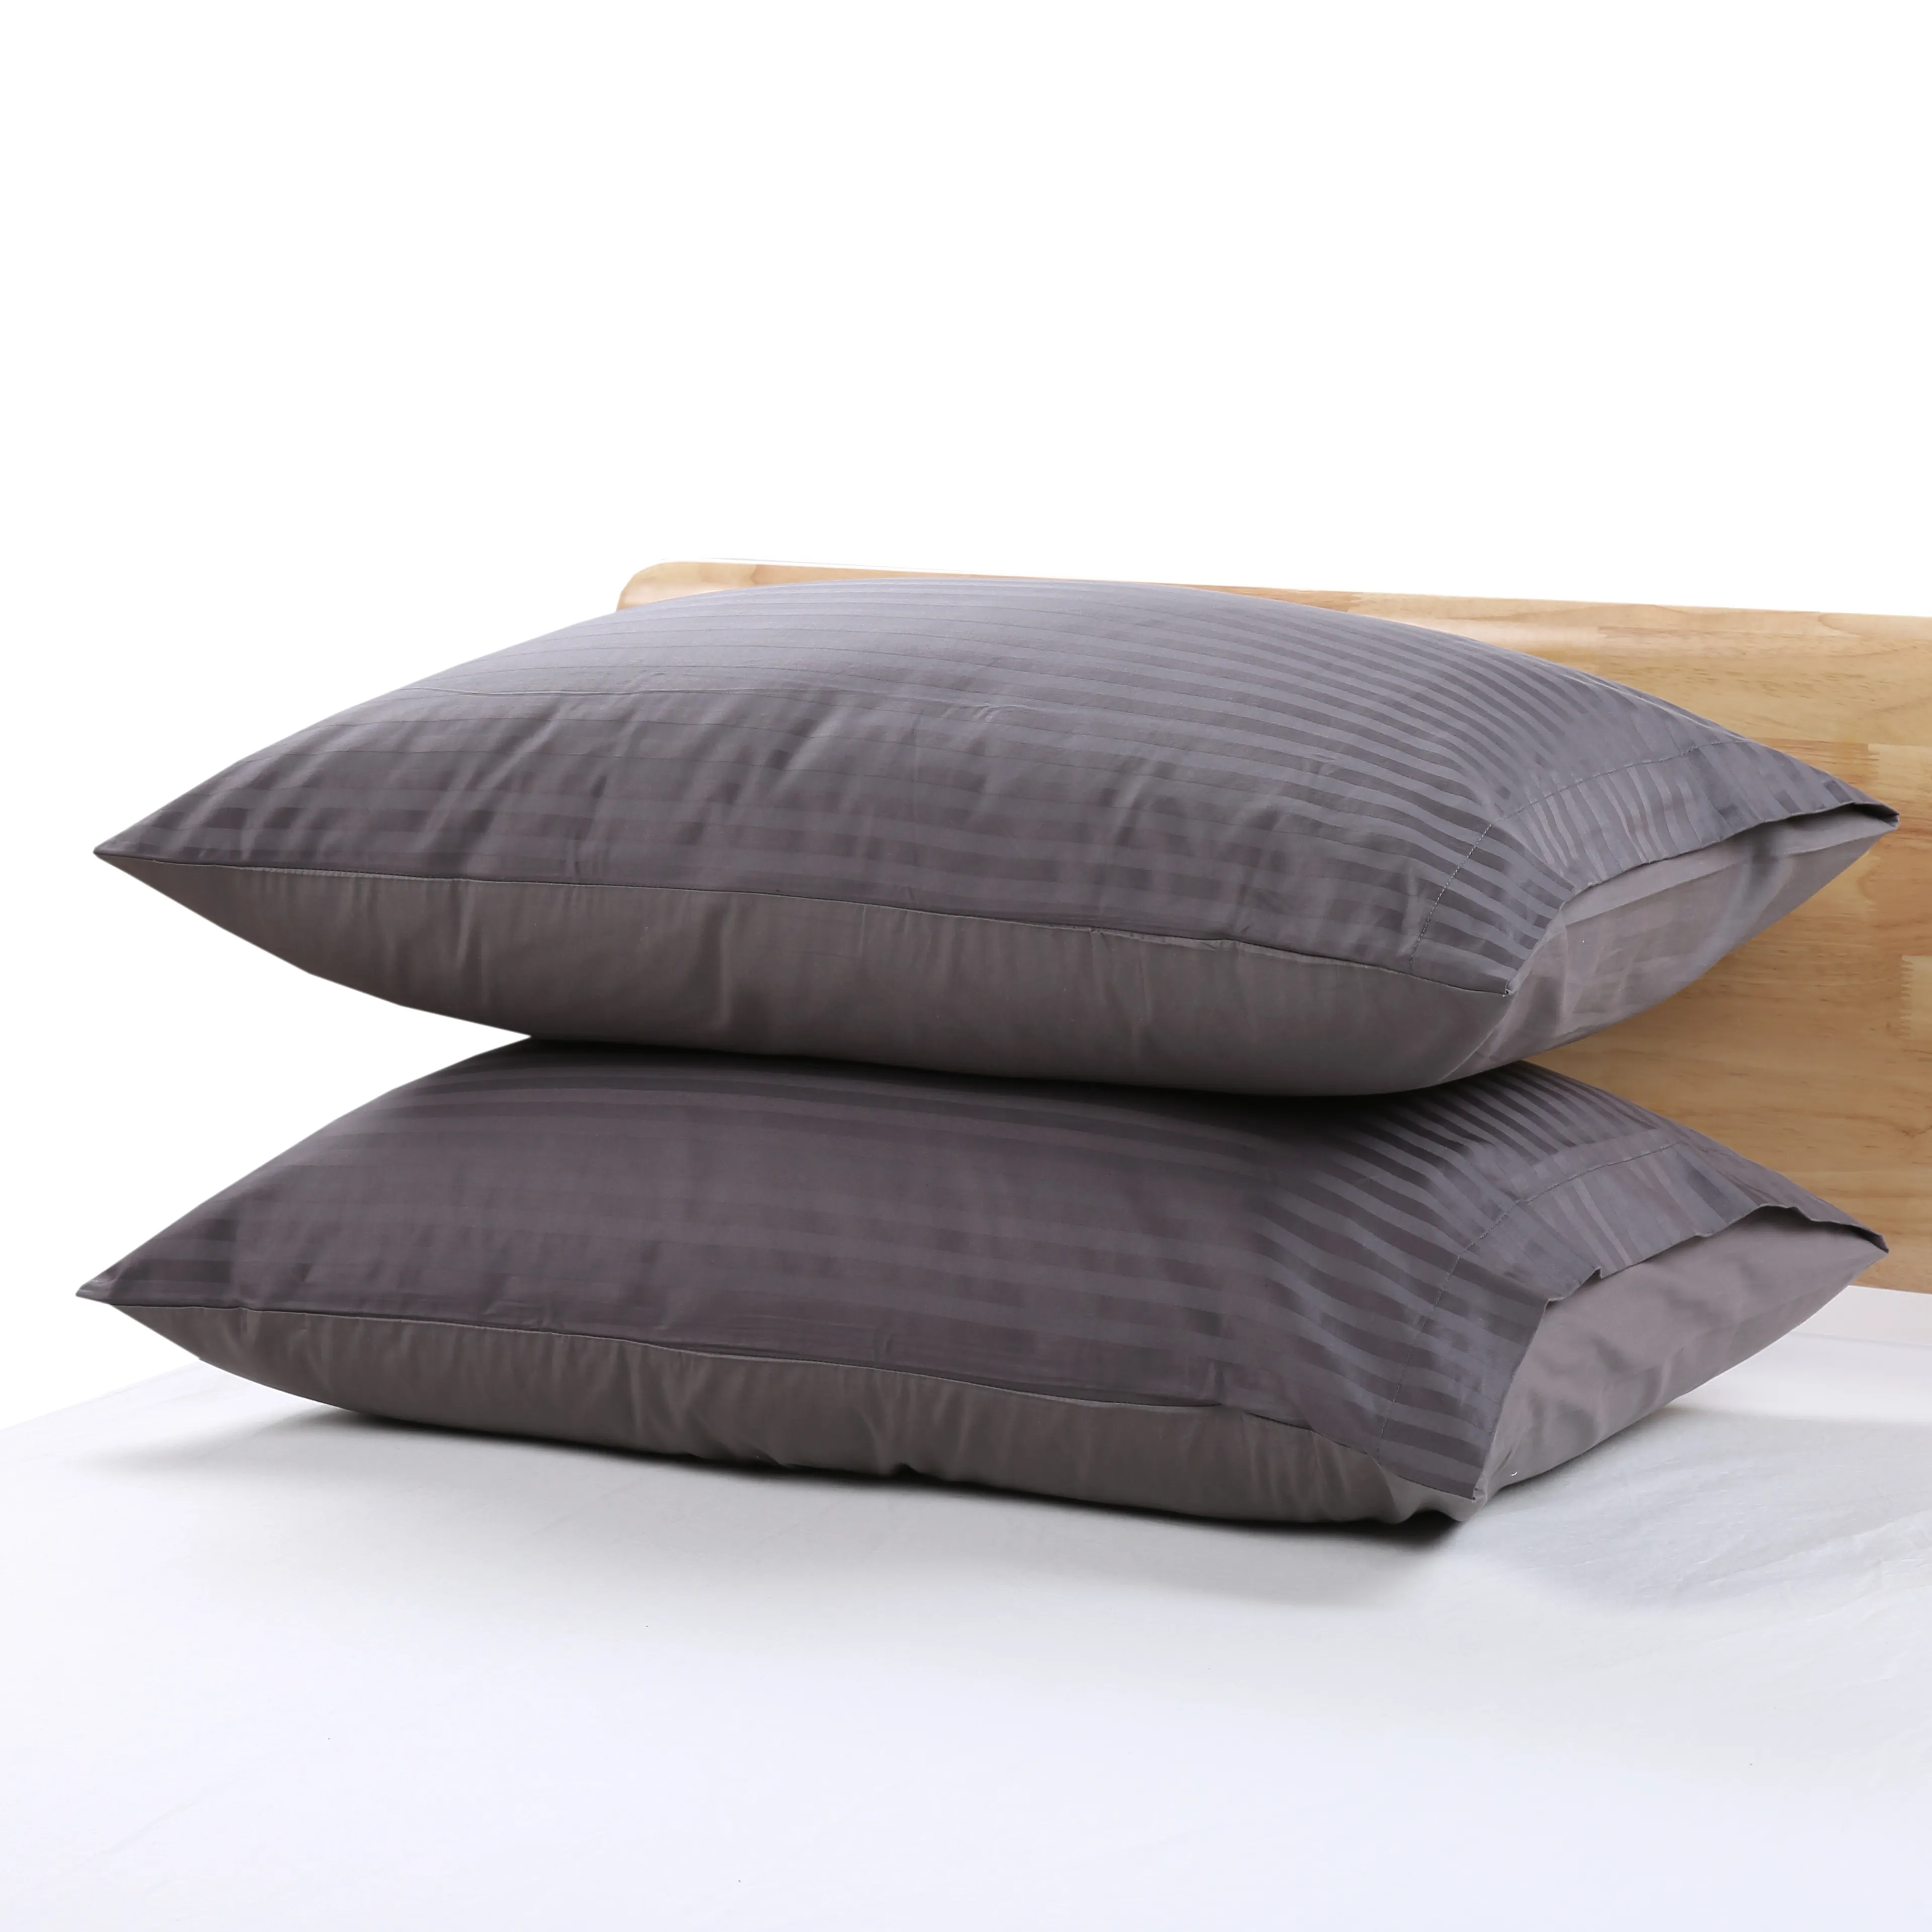 in stock Fashion 300TC Envelop hotel Dark Grey Stripe 100% Cotton Pillowcase Pillow Case